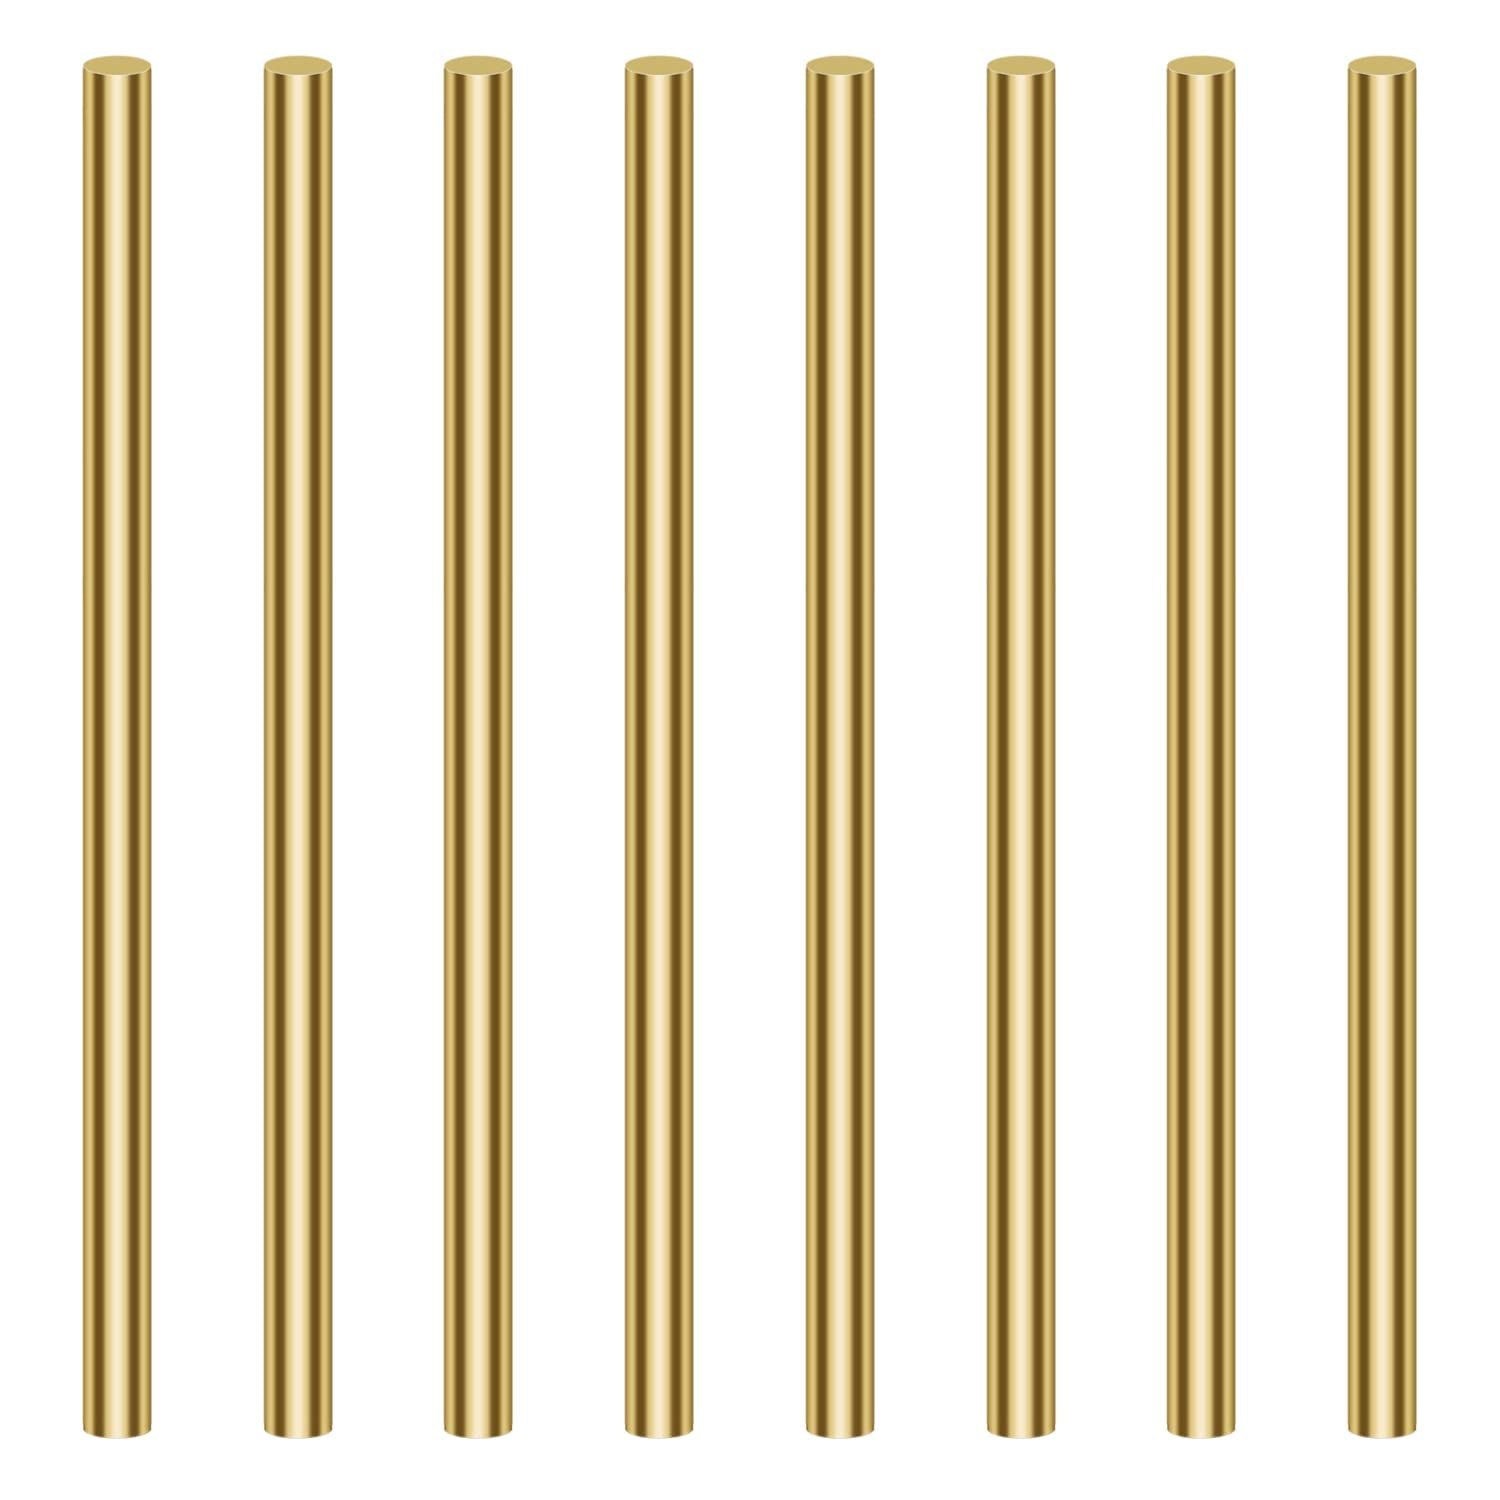 Brass round Rods Bar Assorted Diameter 2-8Mm for DIY Craft (21 PCS)